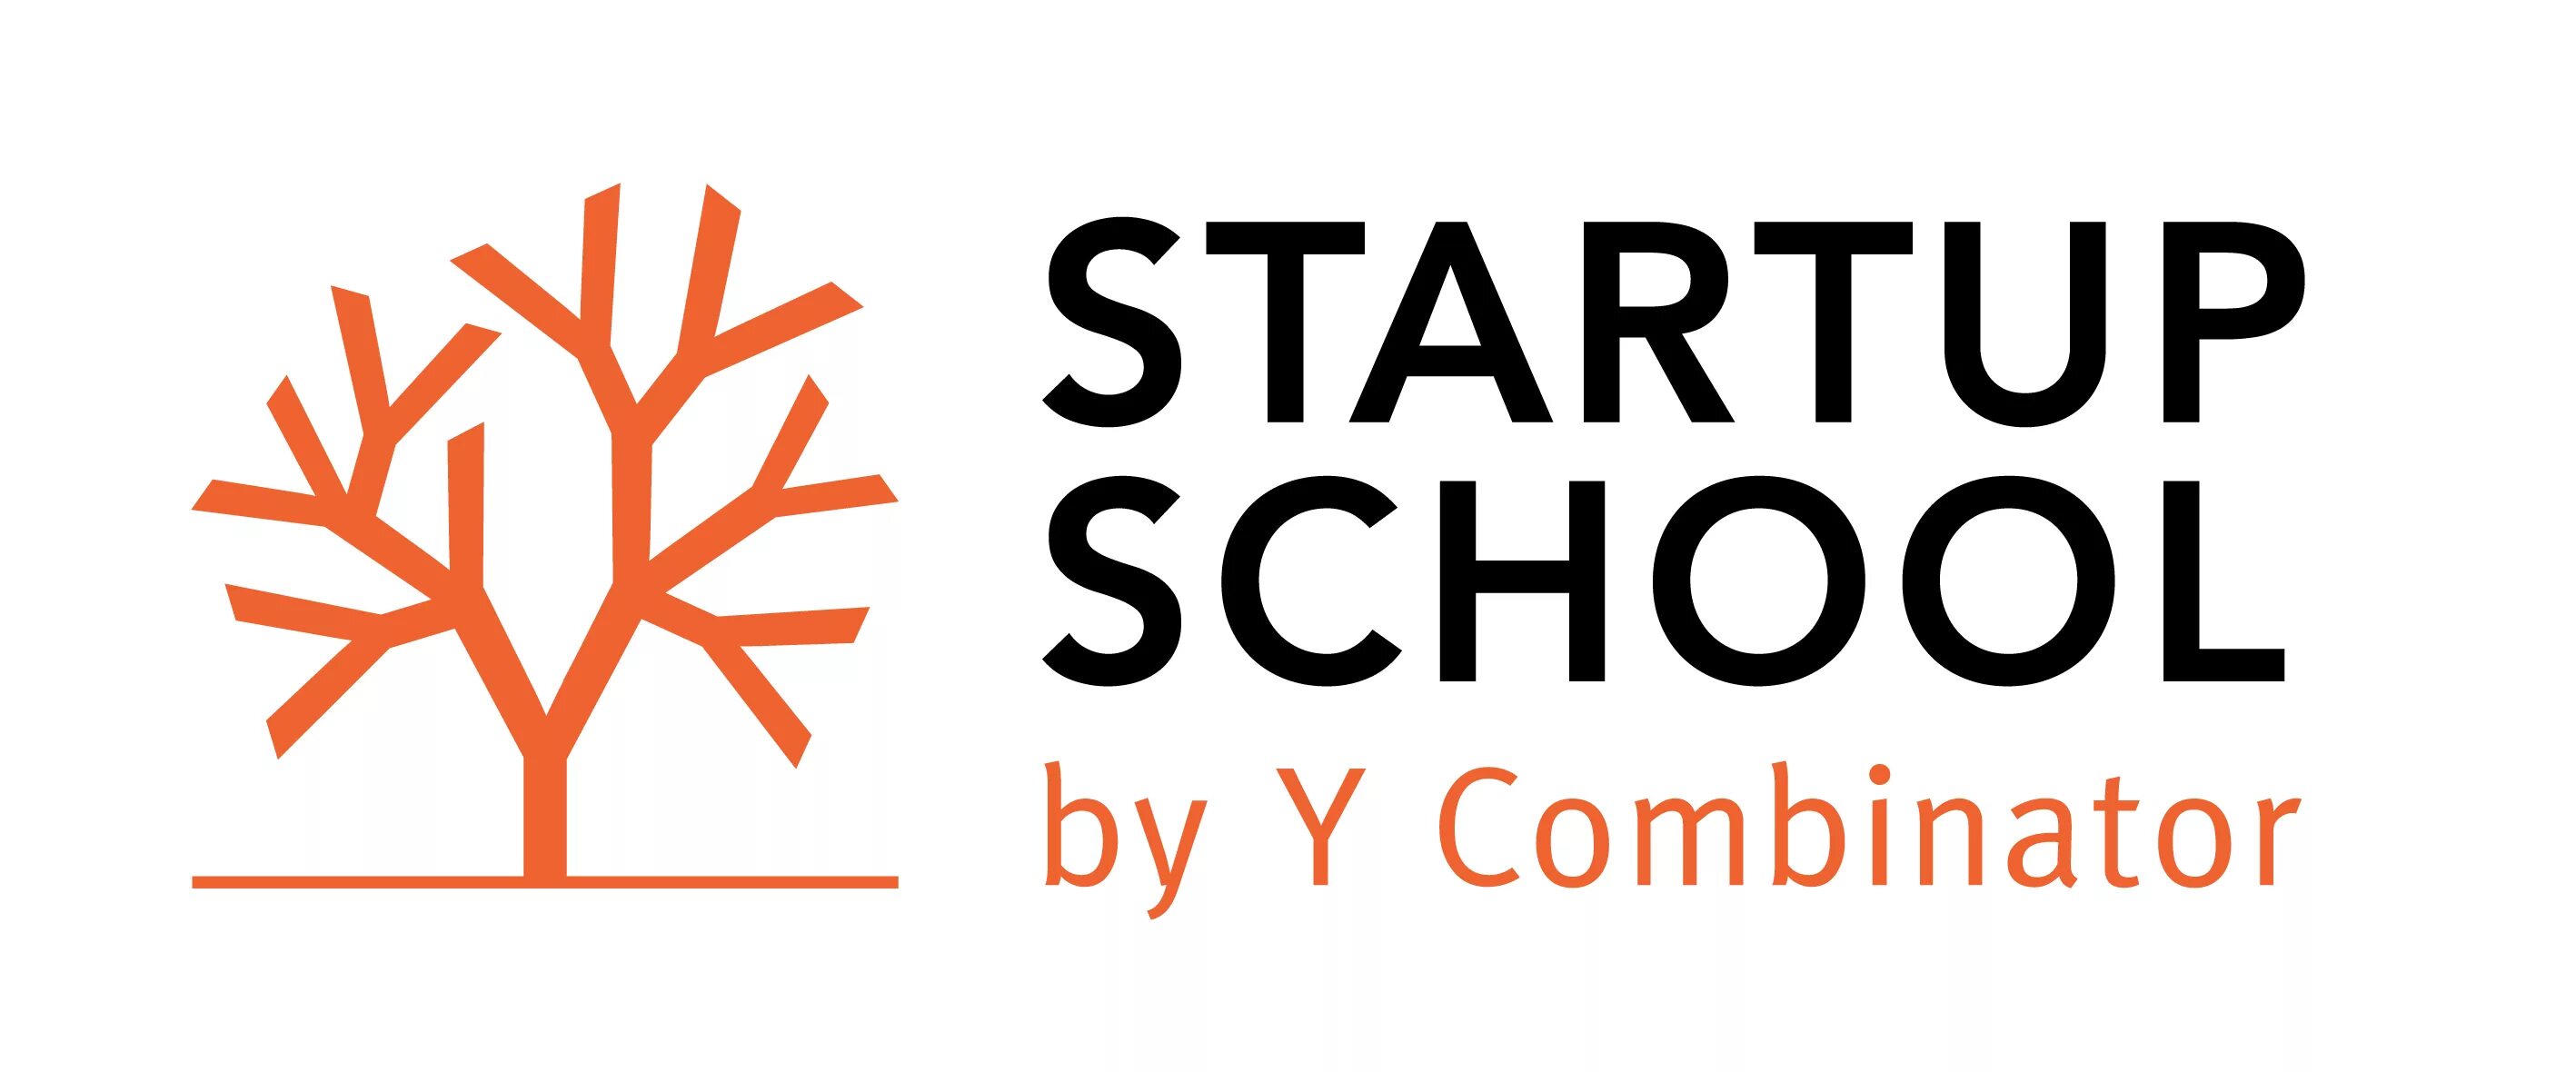 Start up school. Startup School. Старт ап скул. Combinator. Школа стартапов.